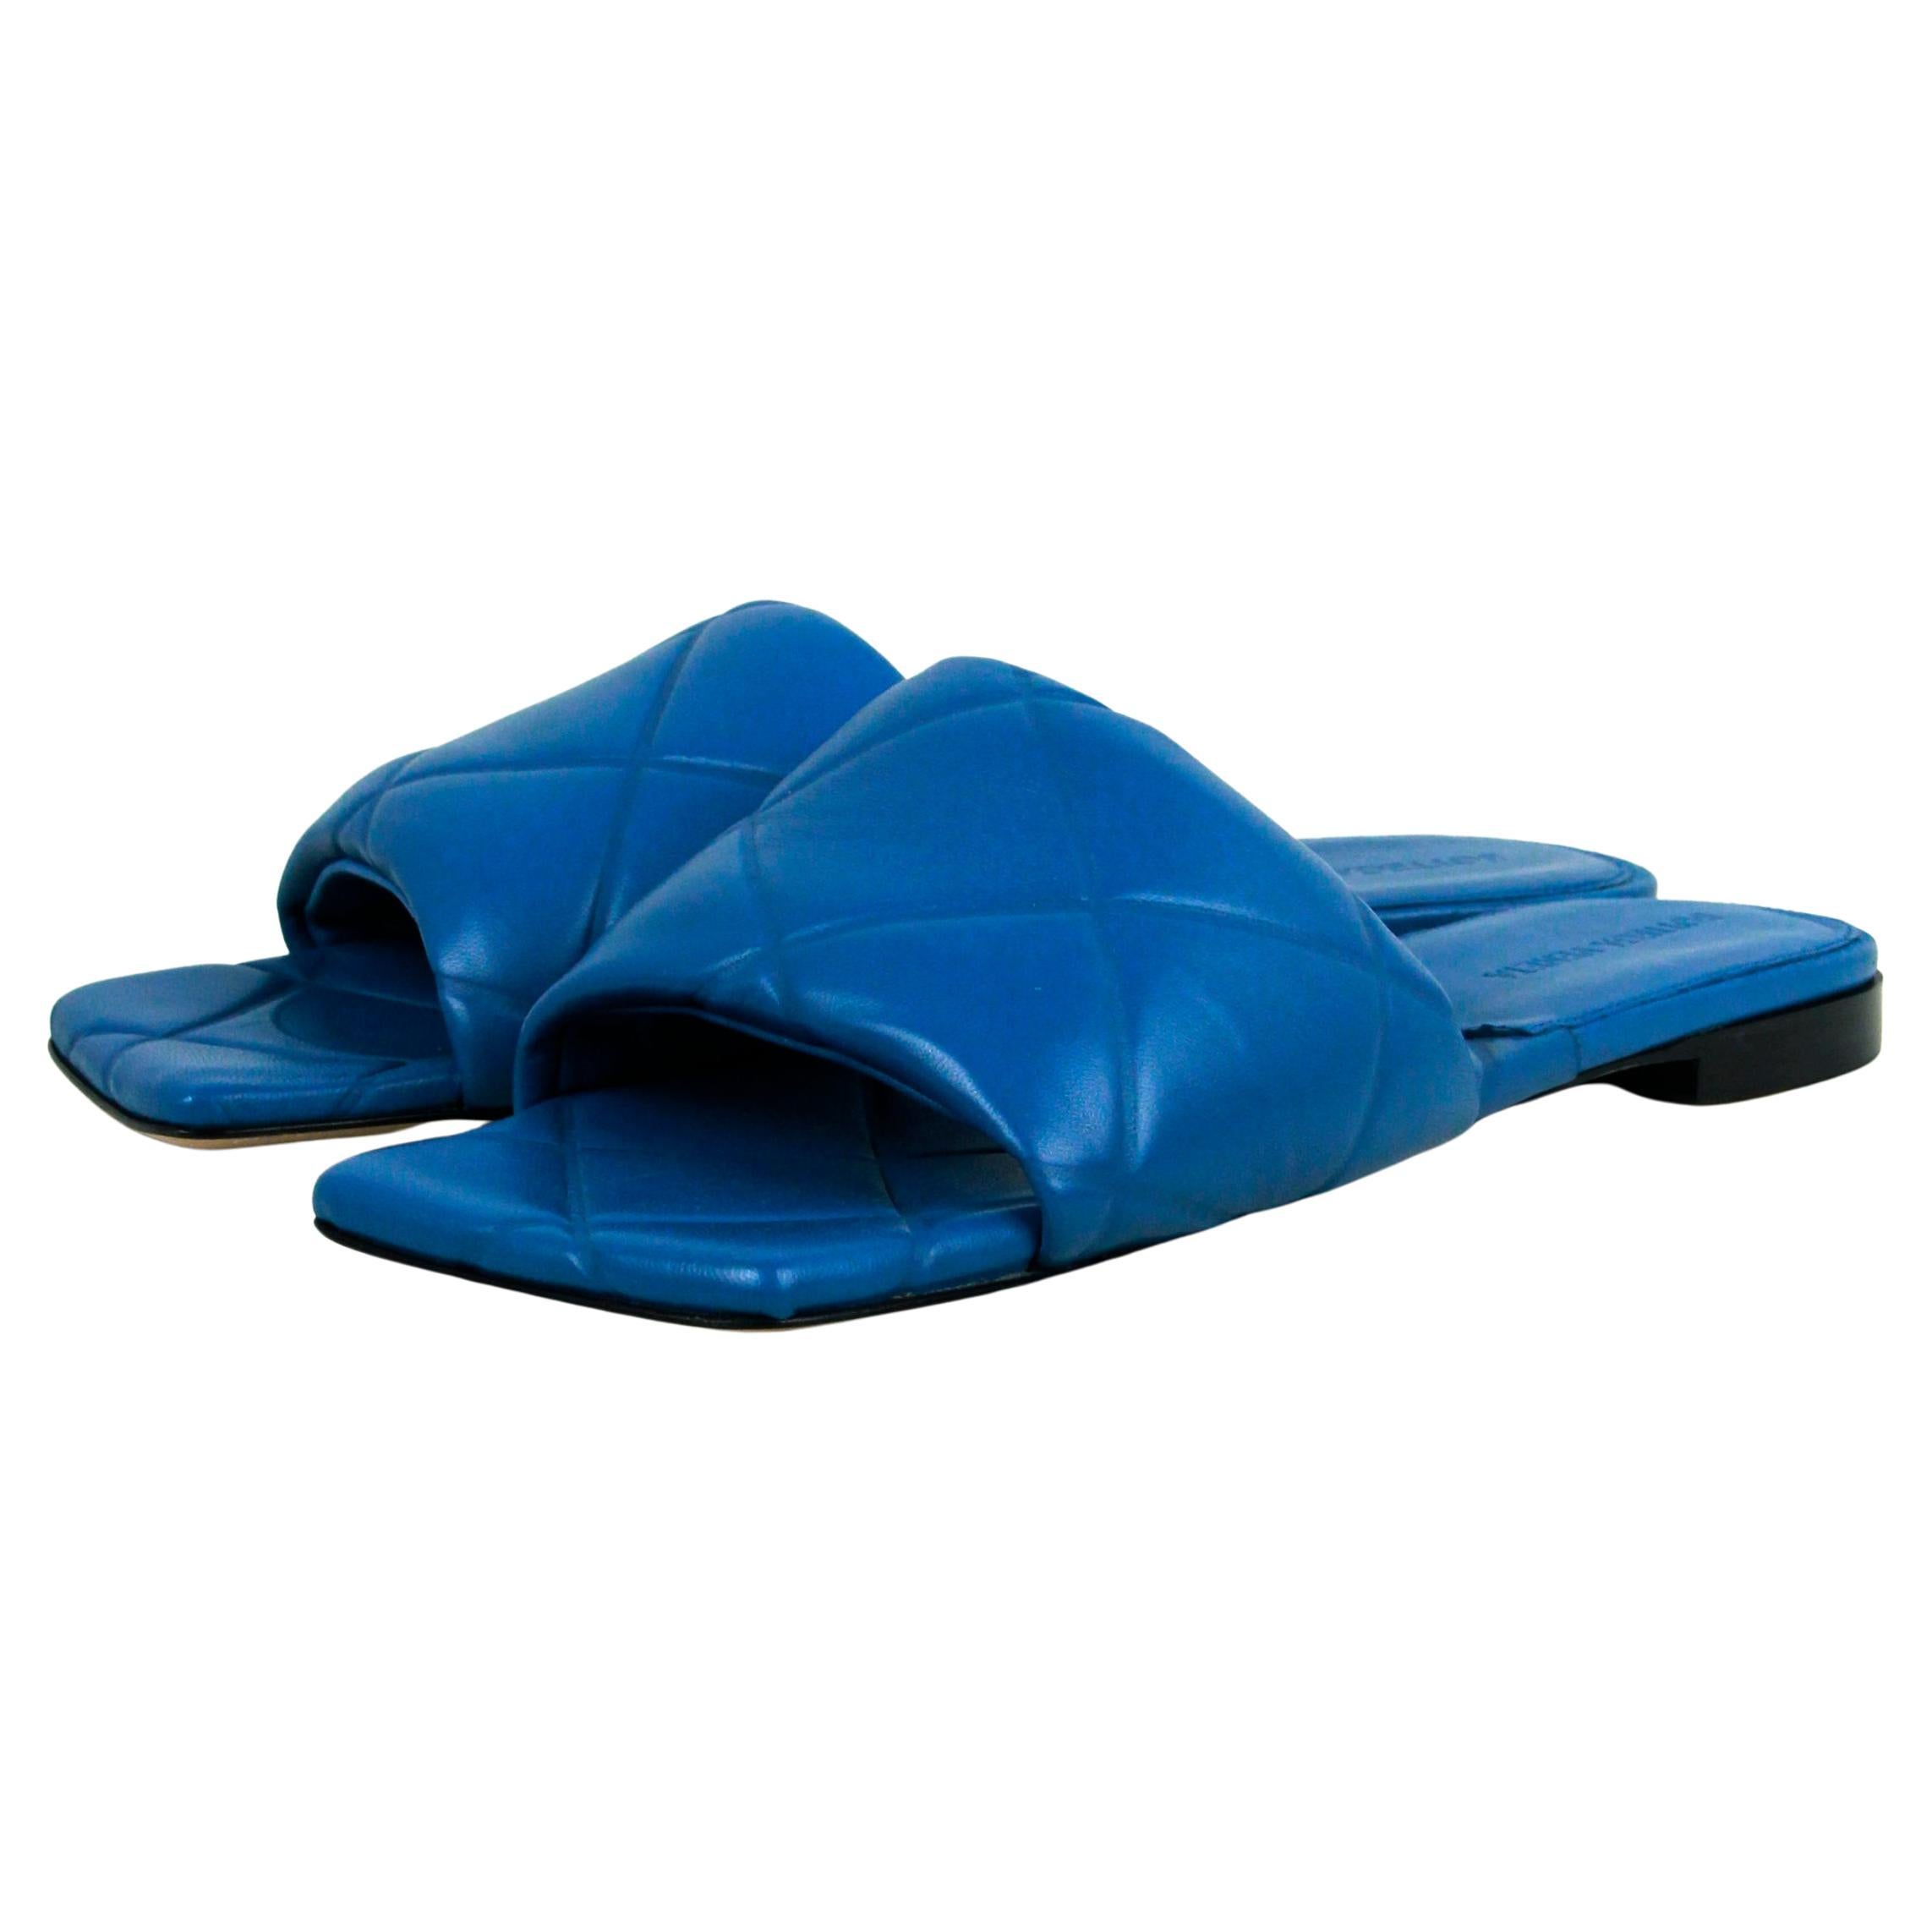 Women's Bottega Veneta NEW Pacific Blue Leather Quilted Flat Sandals sz 39